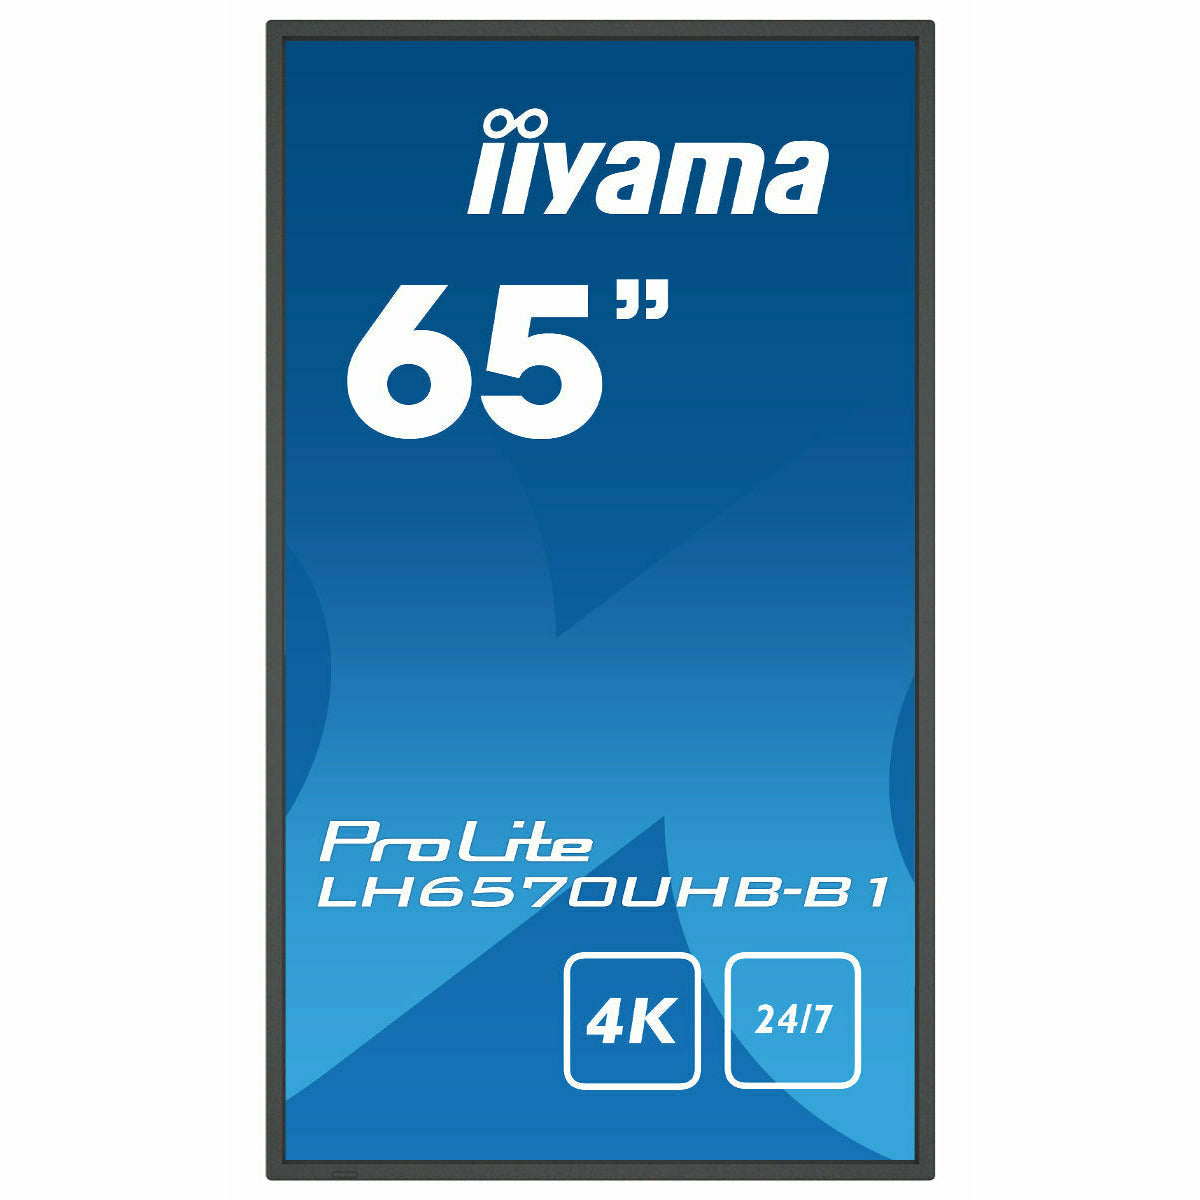 Dark Cyan iiyama ProLite LH6570UHB-B1 65" Large Format Display with 24/7, 4K UHD, Android 9.0 and 700cd/m² High Brightness